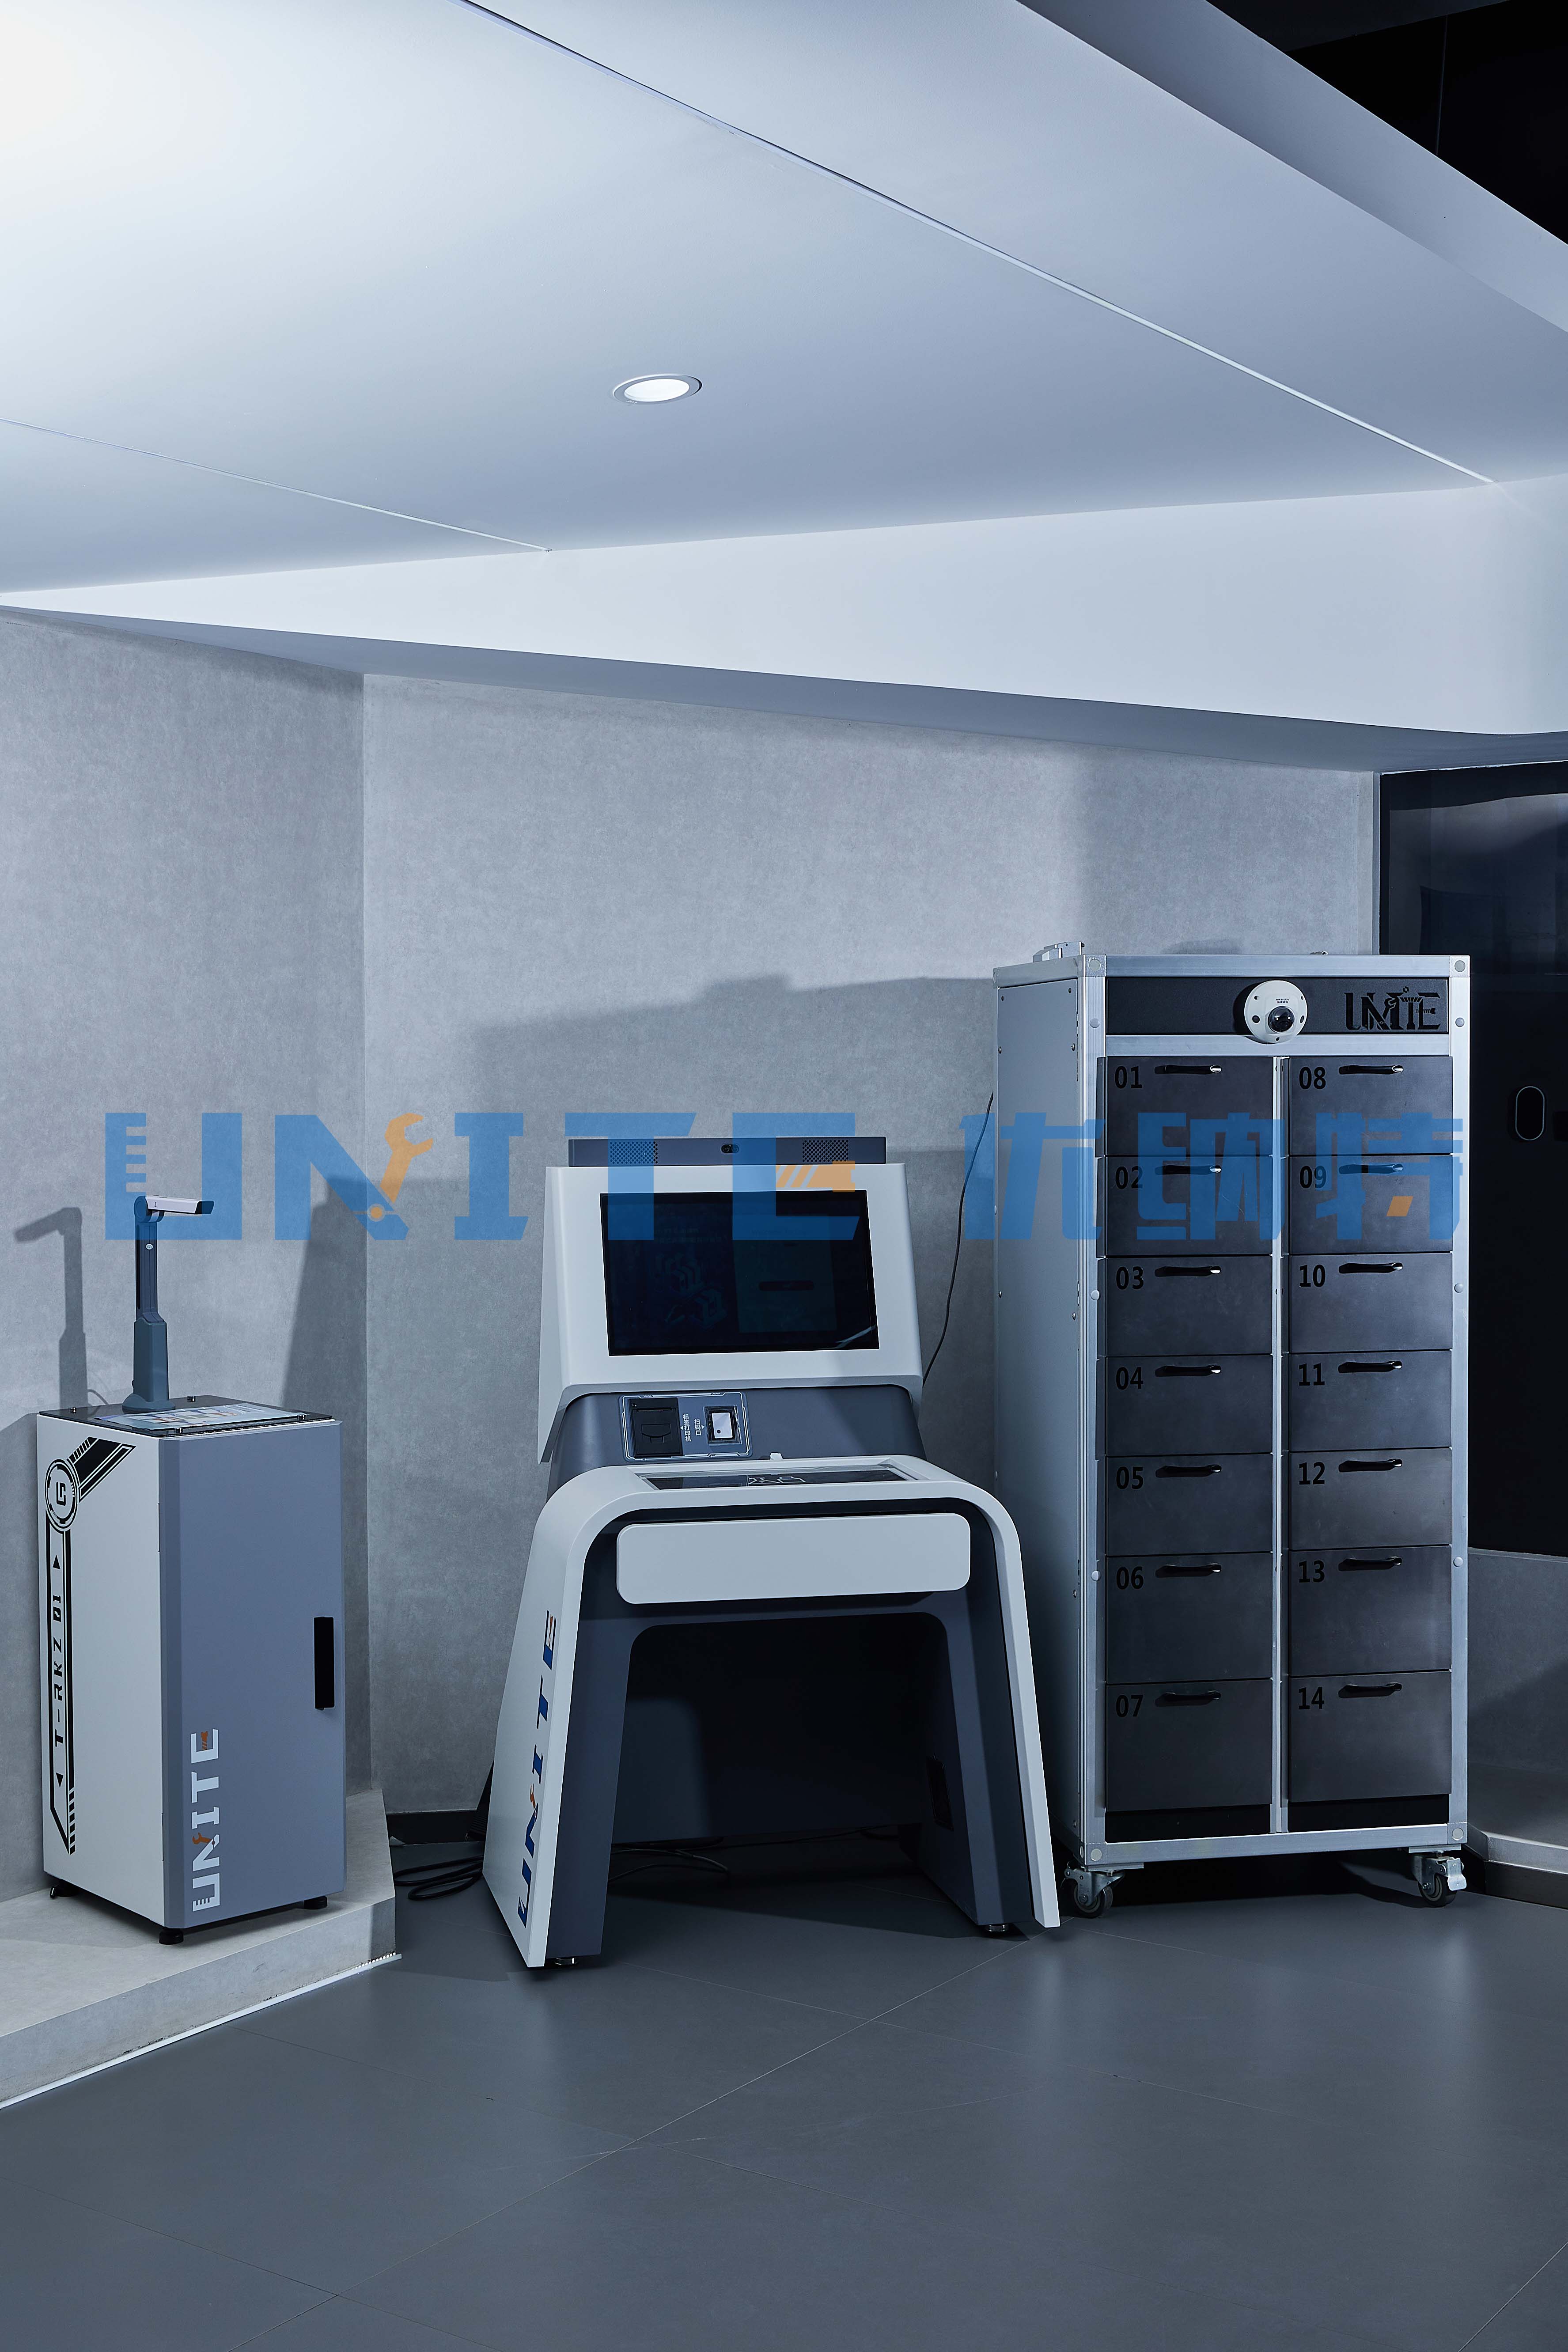 Unite Usample T-T Lab Sample Management System Intelligent Hardware Matrix IOT Desktop Warehouse Control Platform